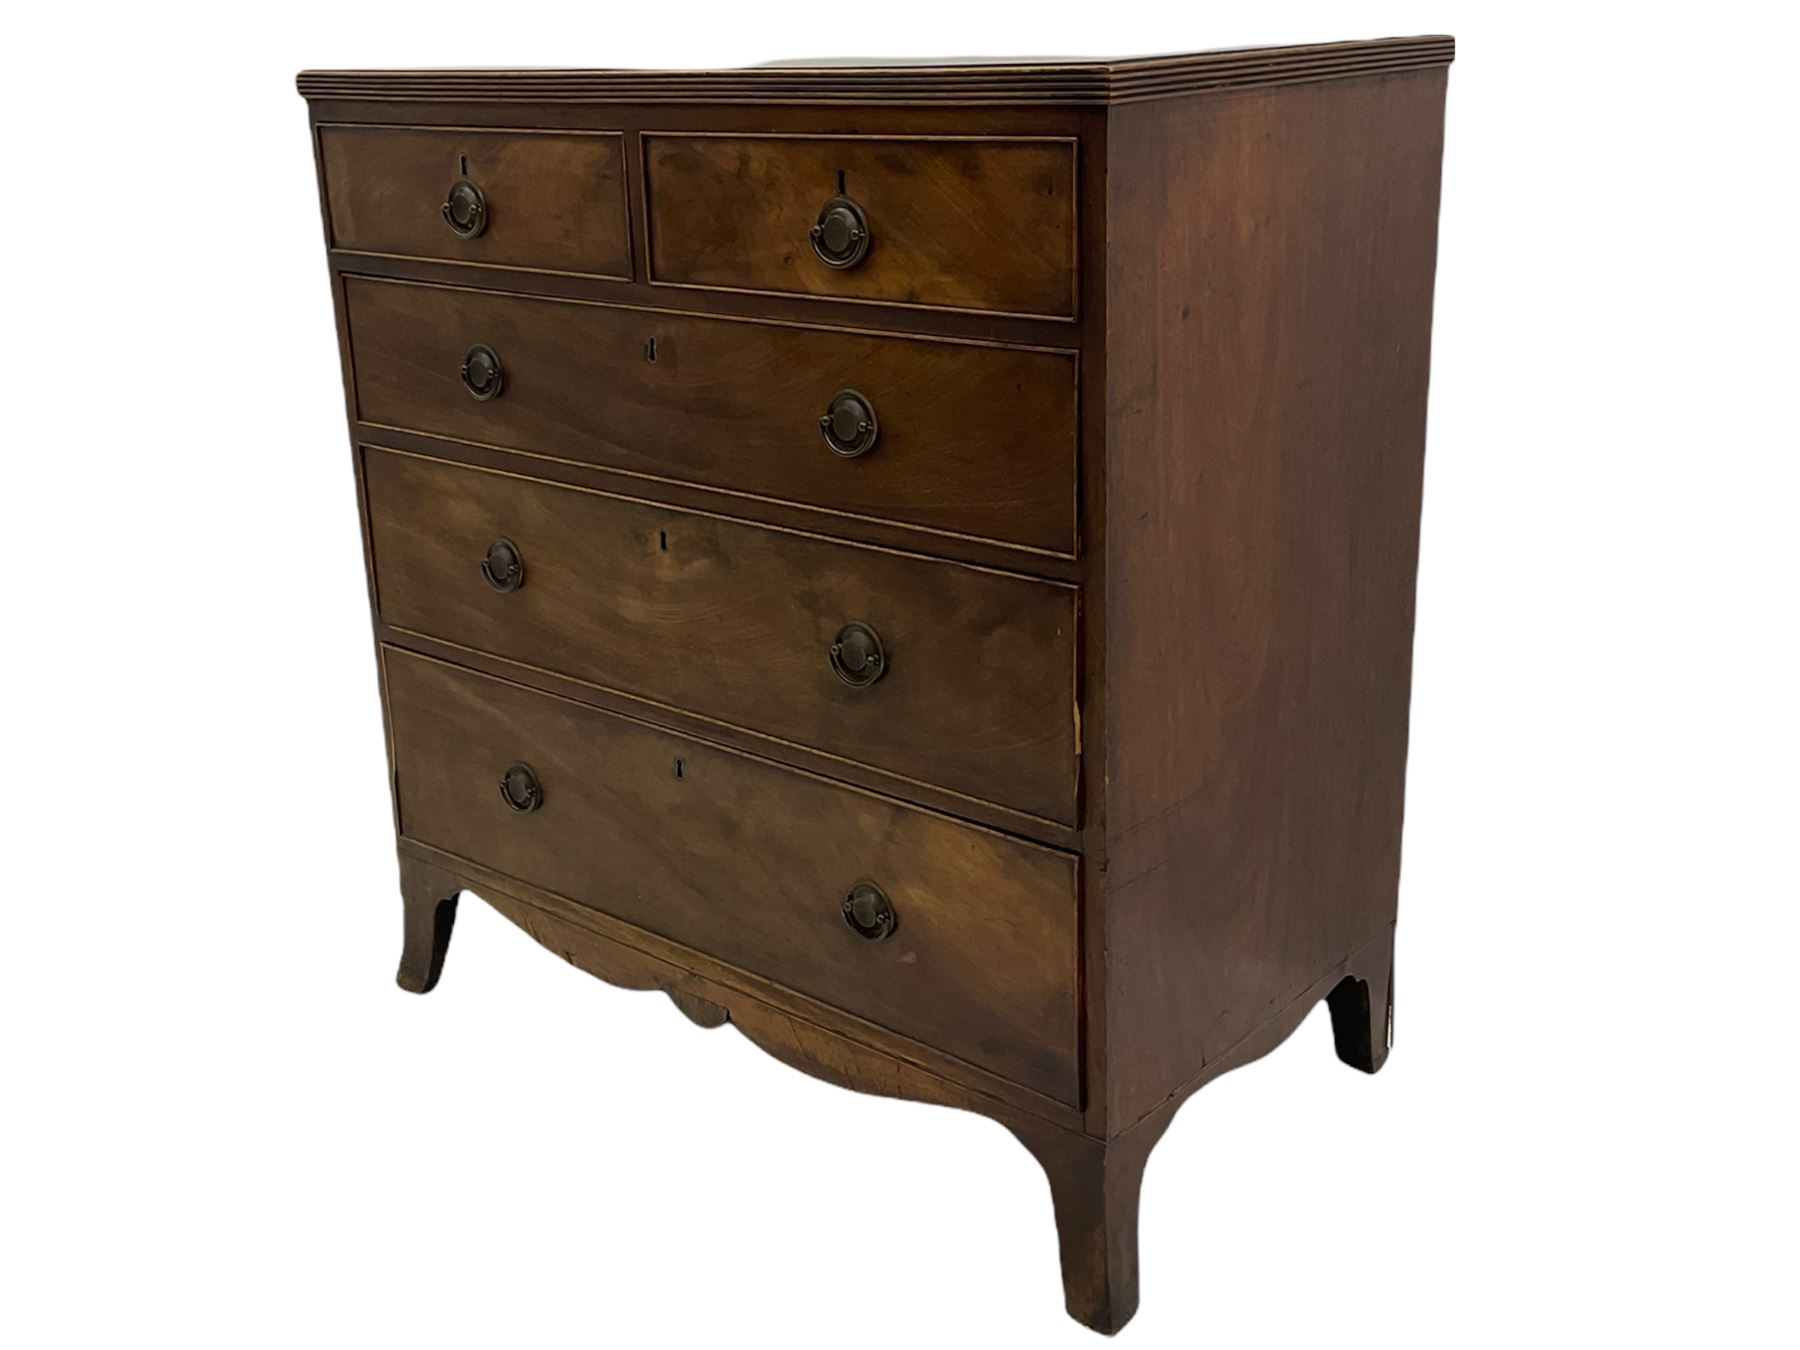 19th century mahogany chest - Image 4 of 7